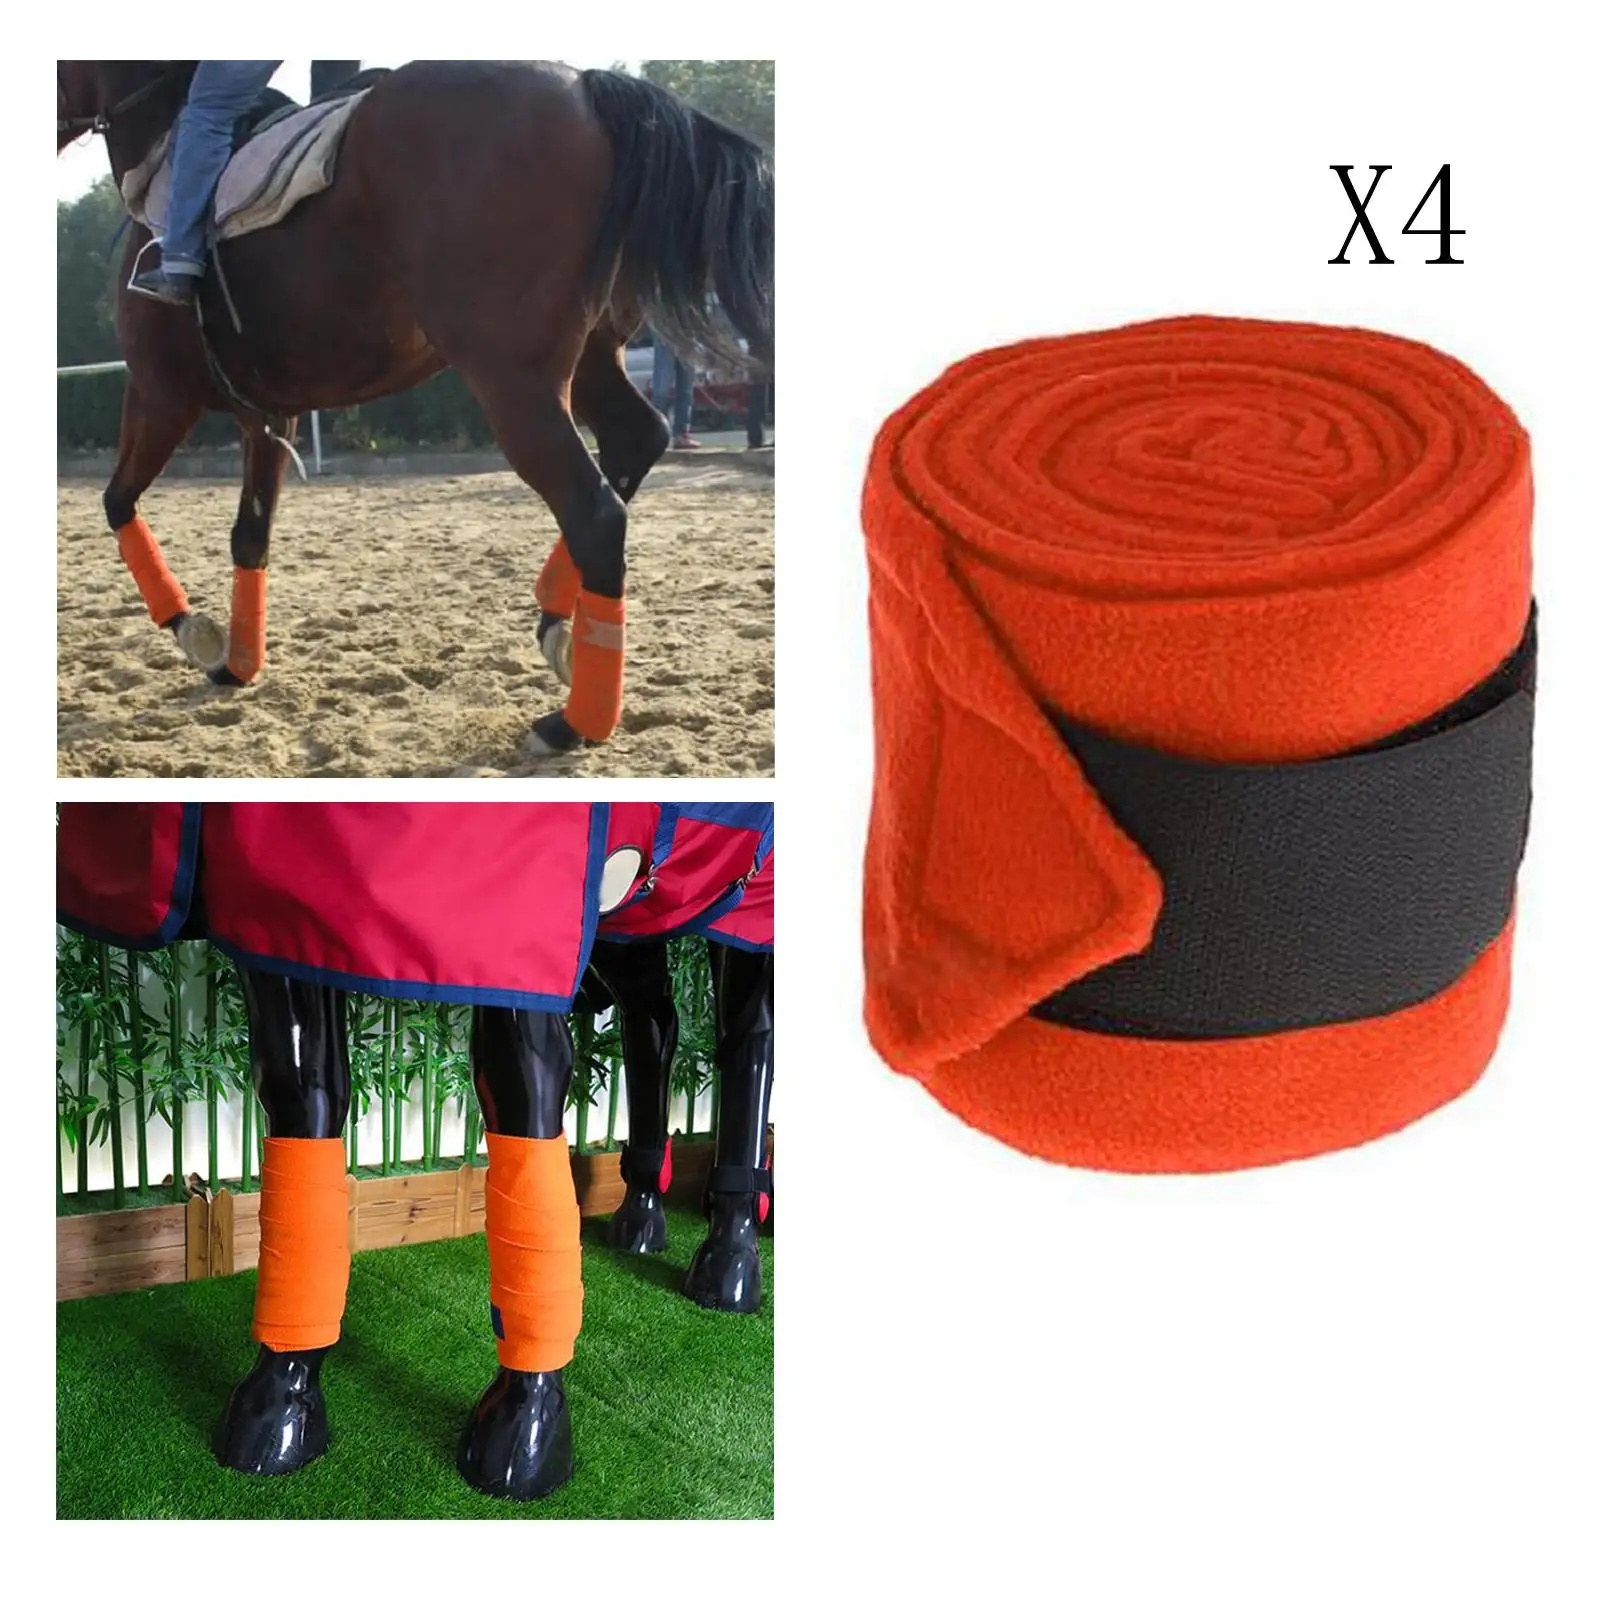 4Pieces Horse Leg Wraps Horse Splint Support, Soft Fleece Horse Legging Wrap